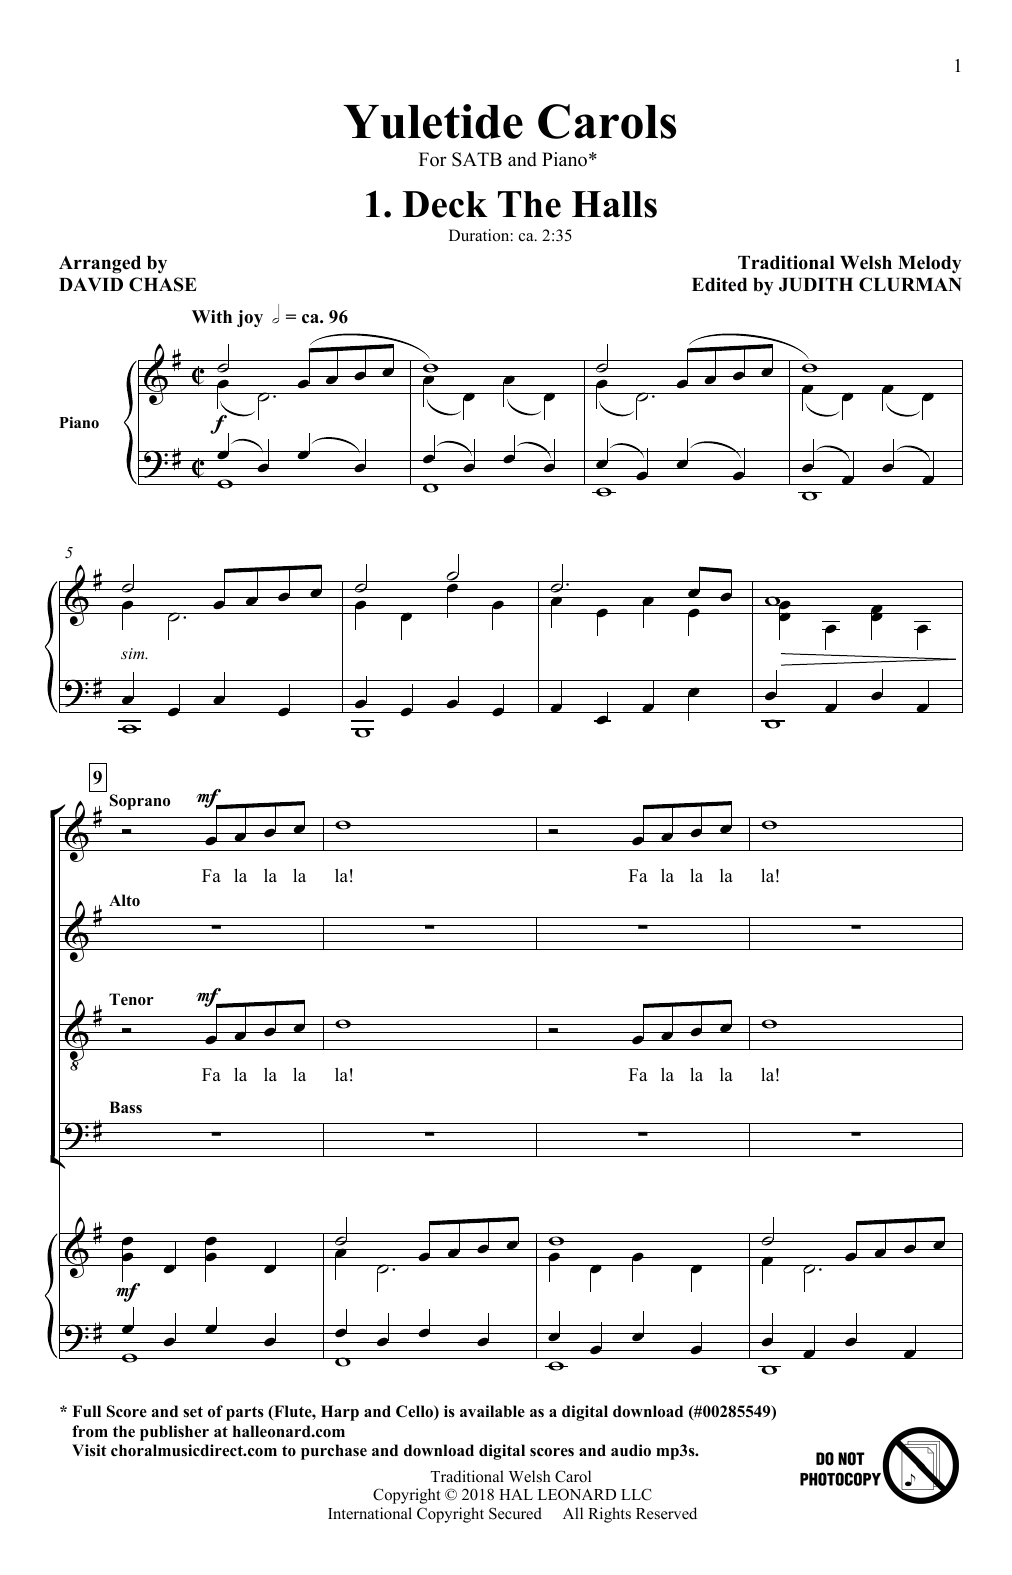 David Chase Yuletide Carols Sheet Music Notes & Chords for SATB Choir - Download or Print PDF